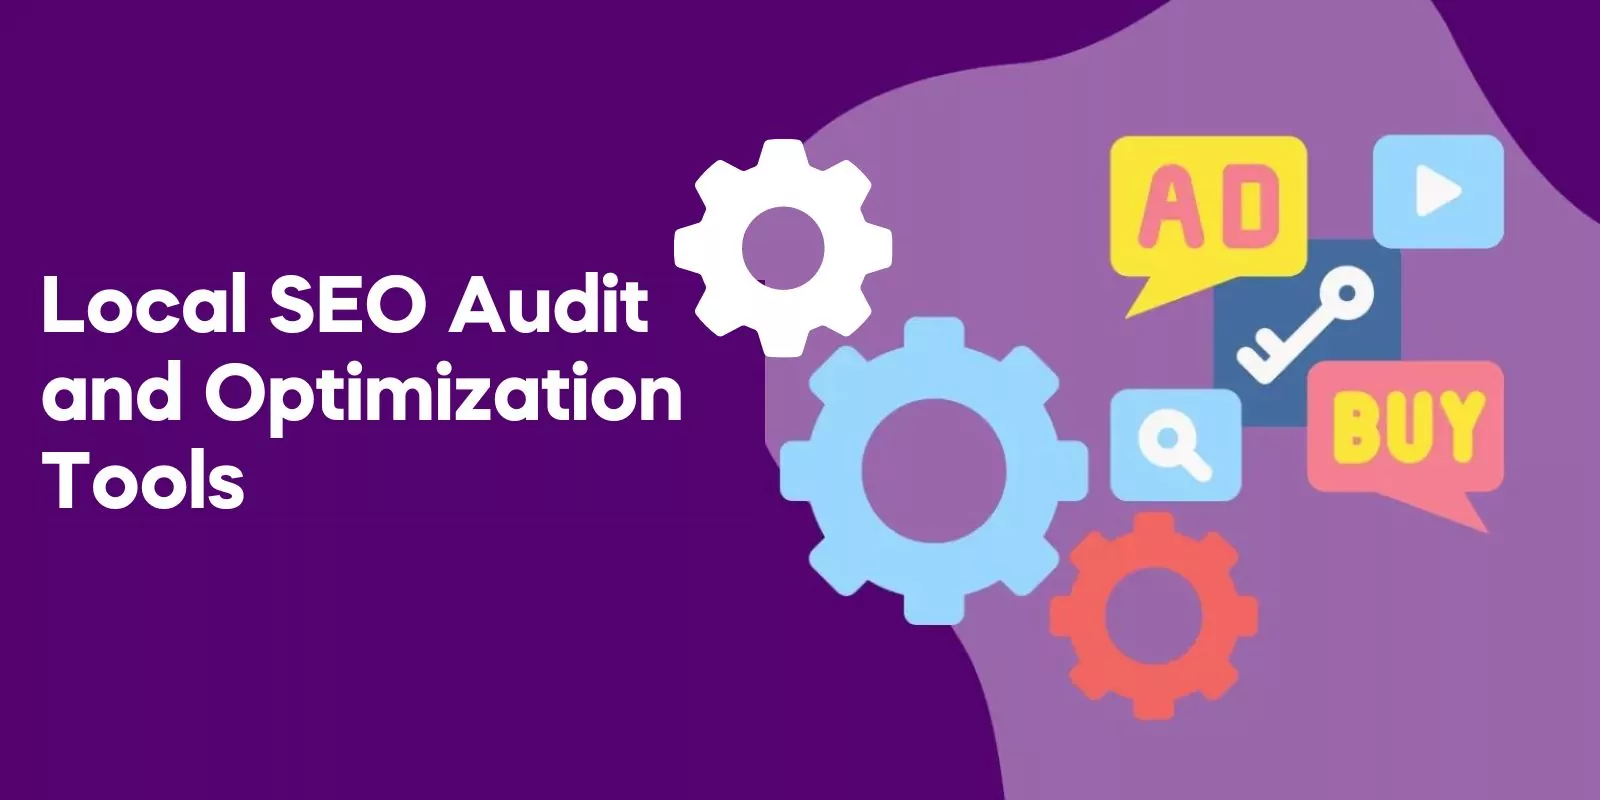 Local SEO Audit and Optimization Tools